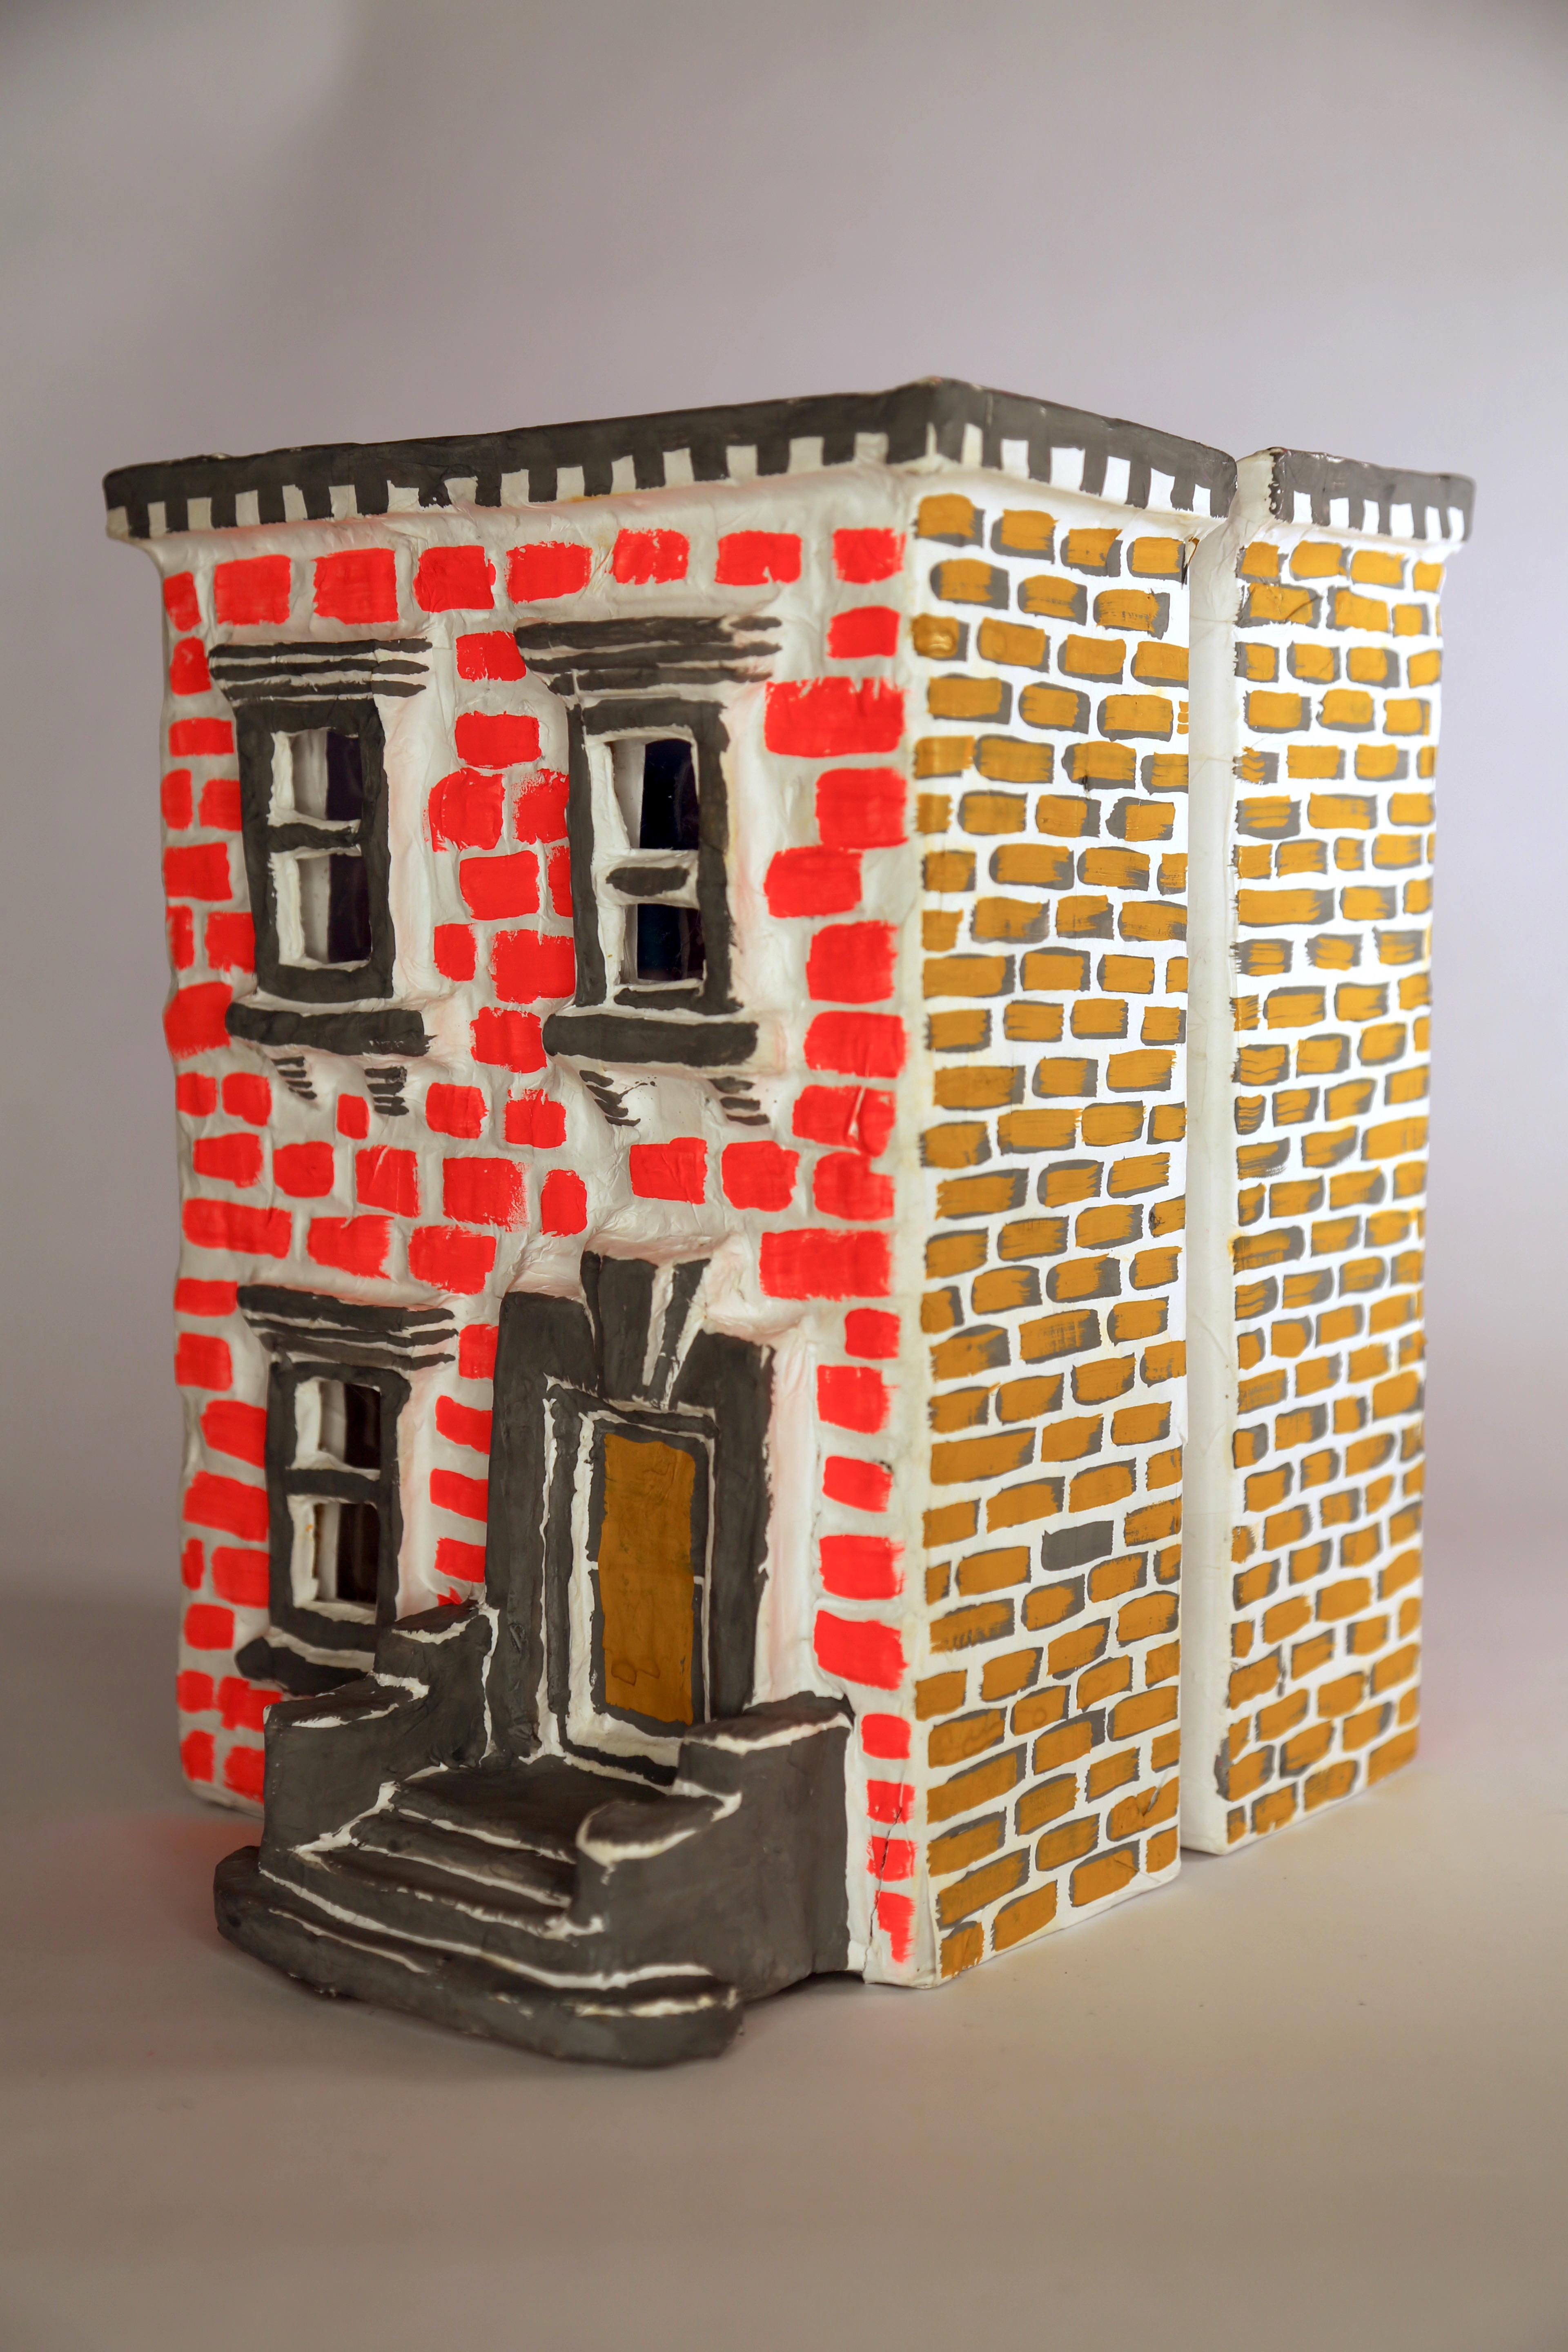 Mixed Media Sculpture of House: 'Spilt House' - Mixed Media Art by Ethan Minsker